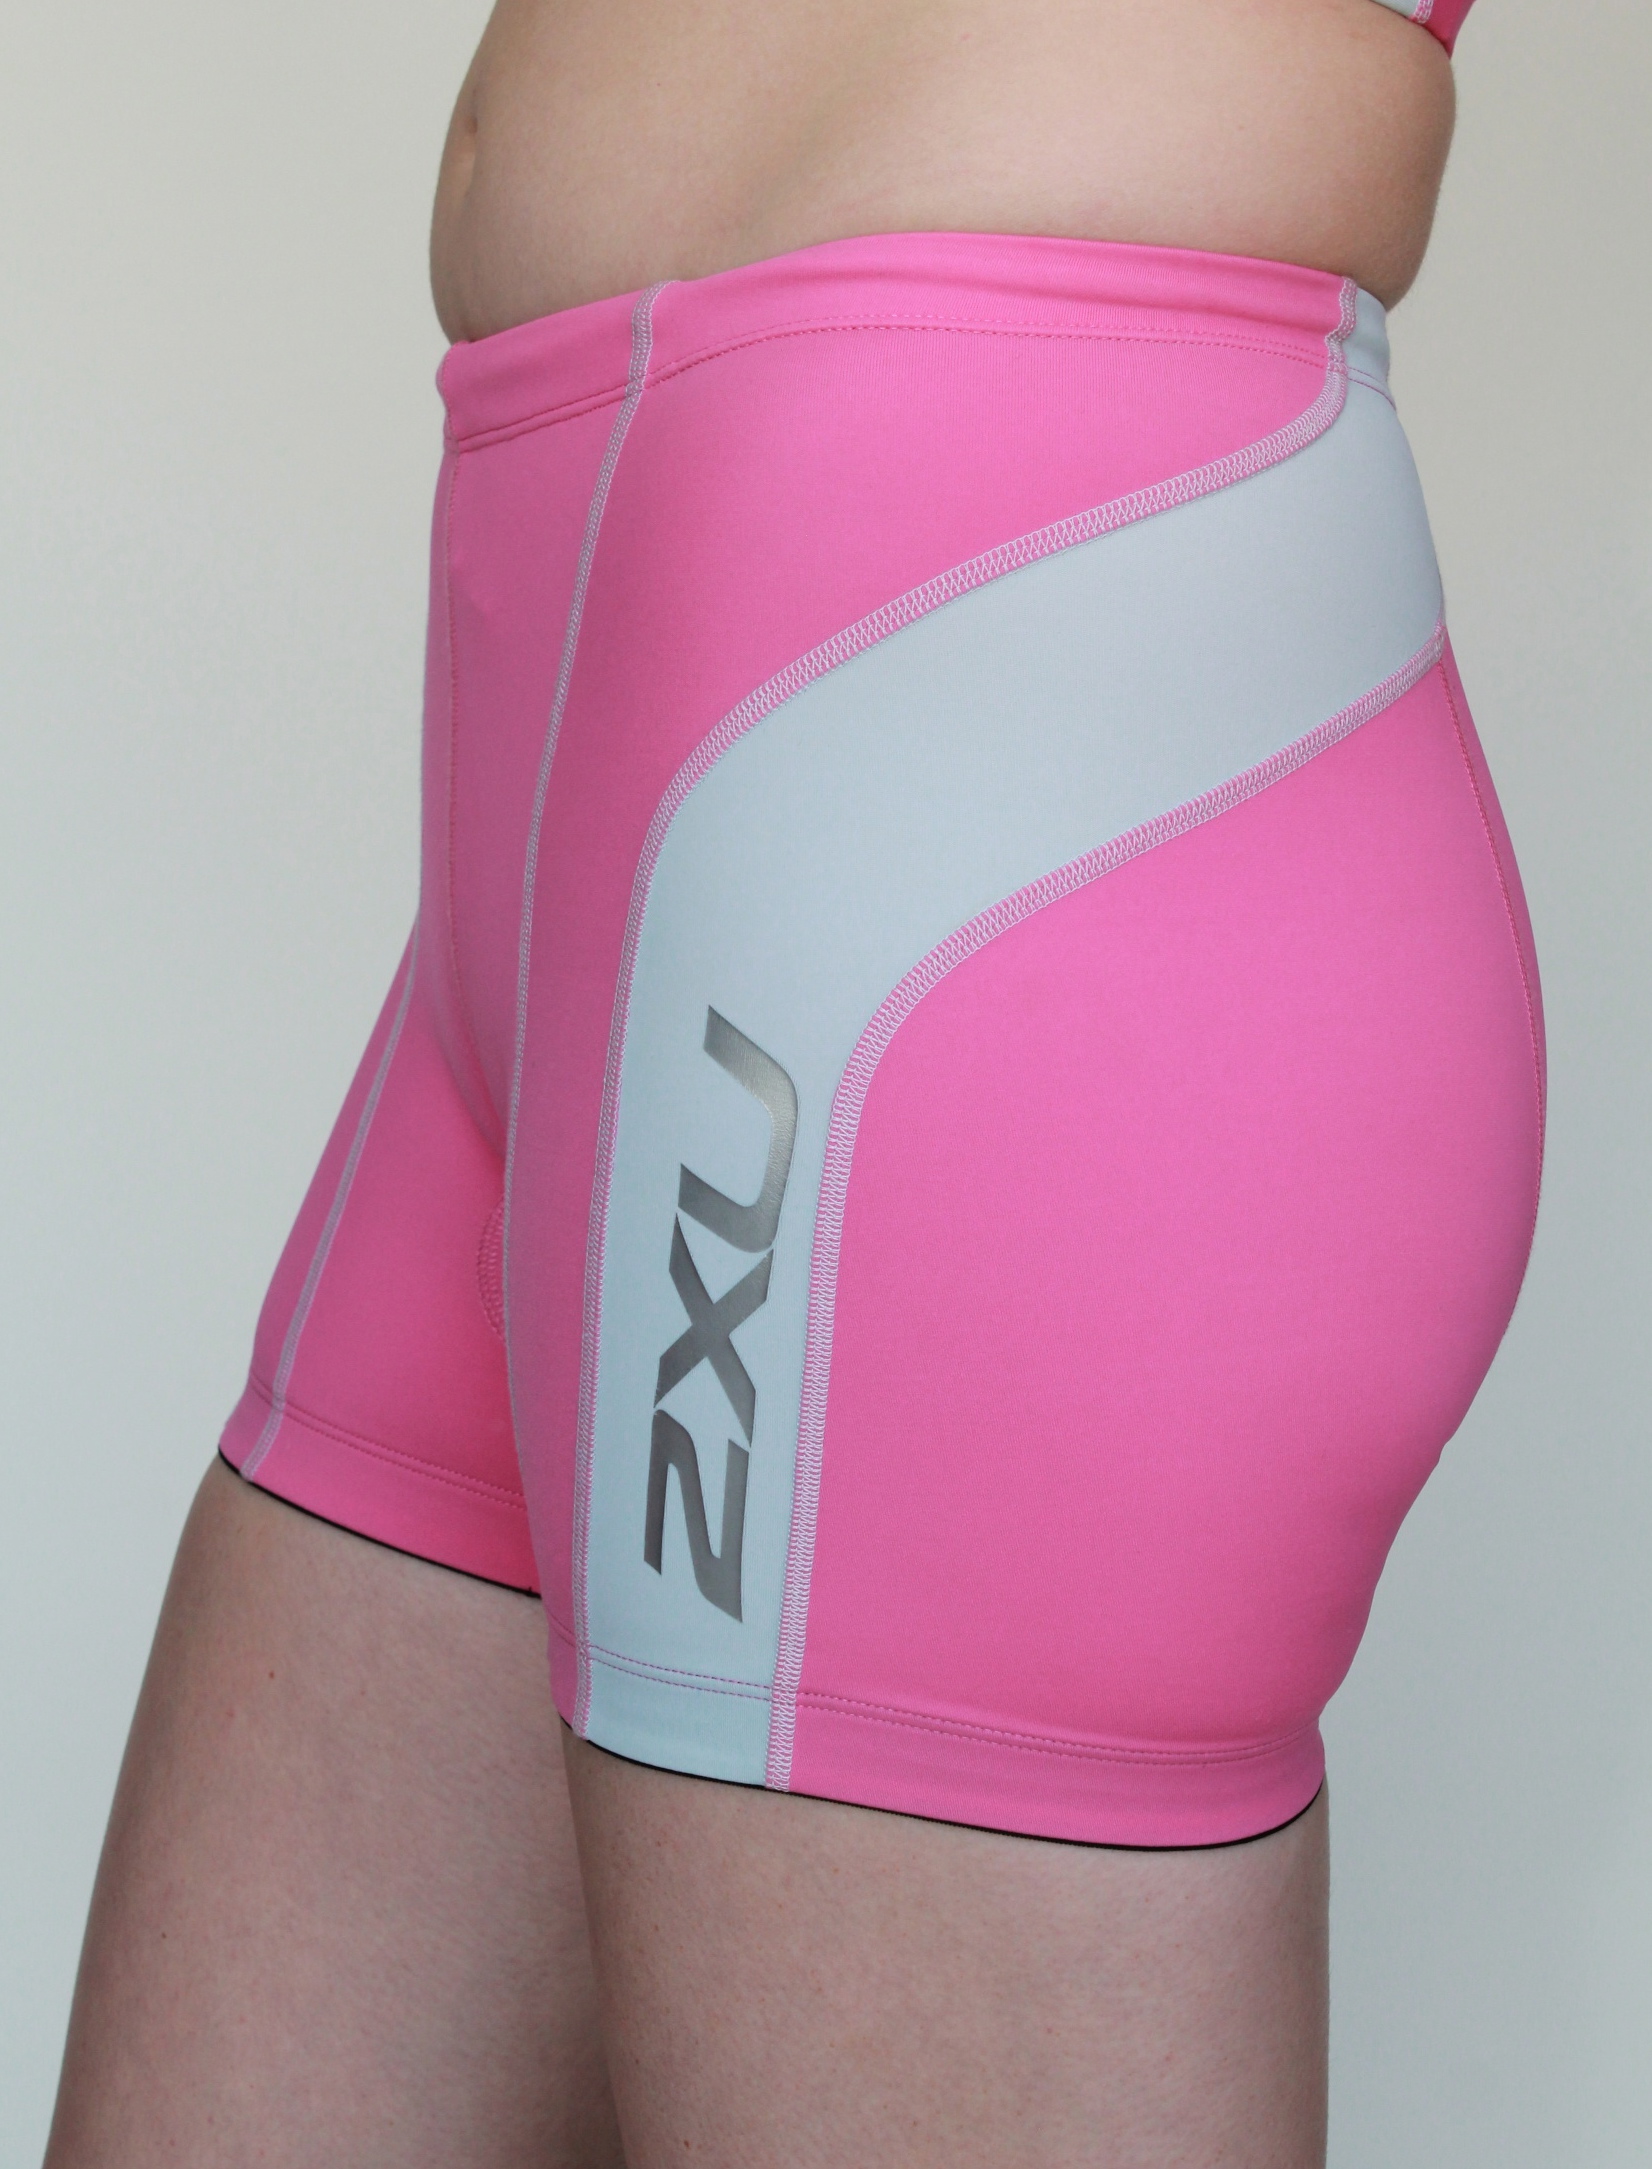 Mean Gene S Bazaar Triathlon Kits 2xu Womens Comp Tri Kit Women’s Cycling Clothing